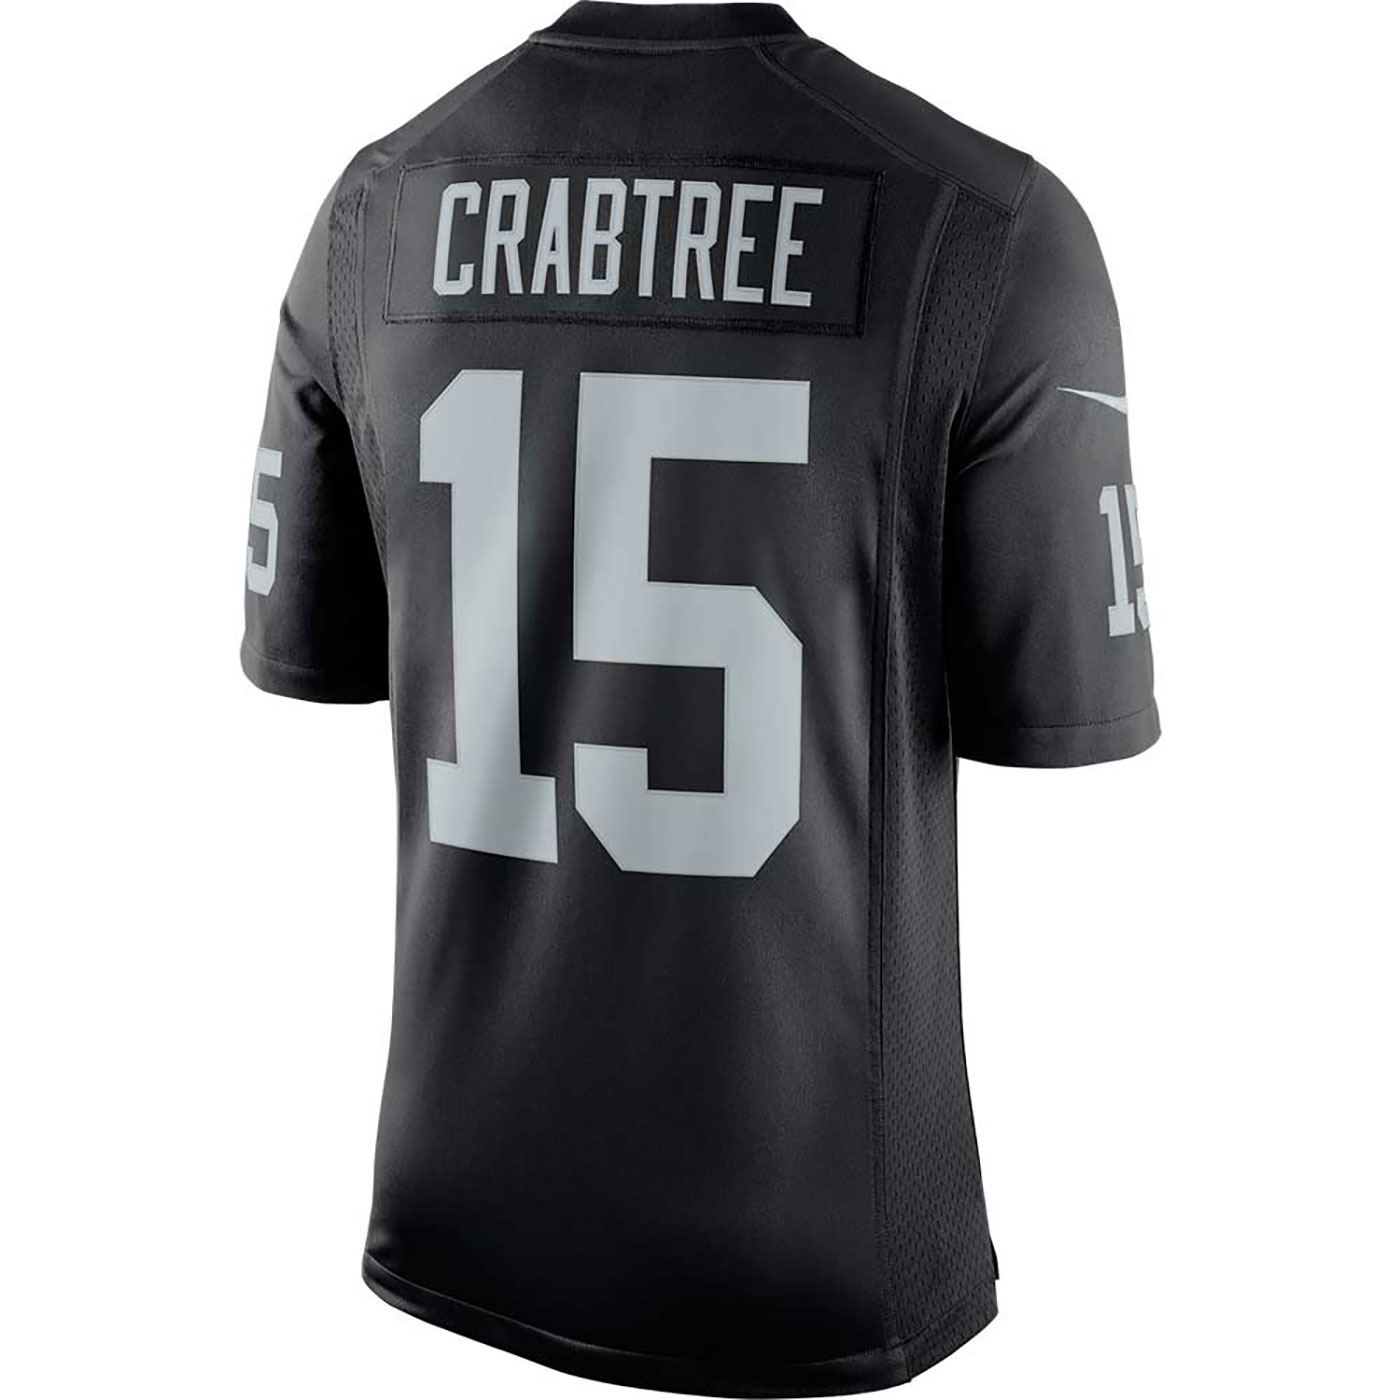 crabtree raiders jersey